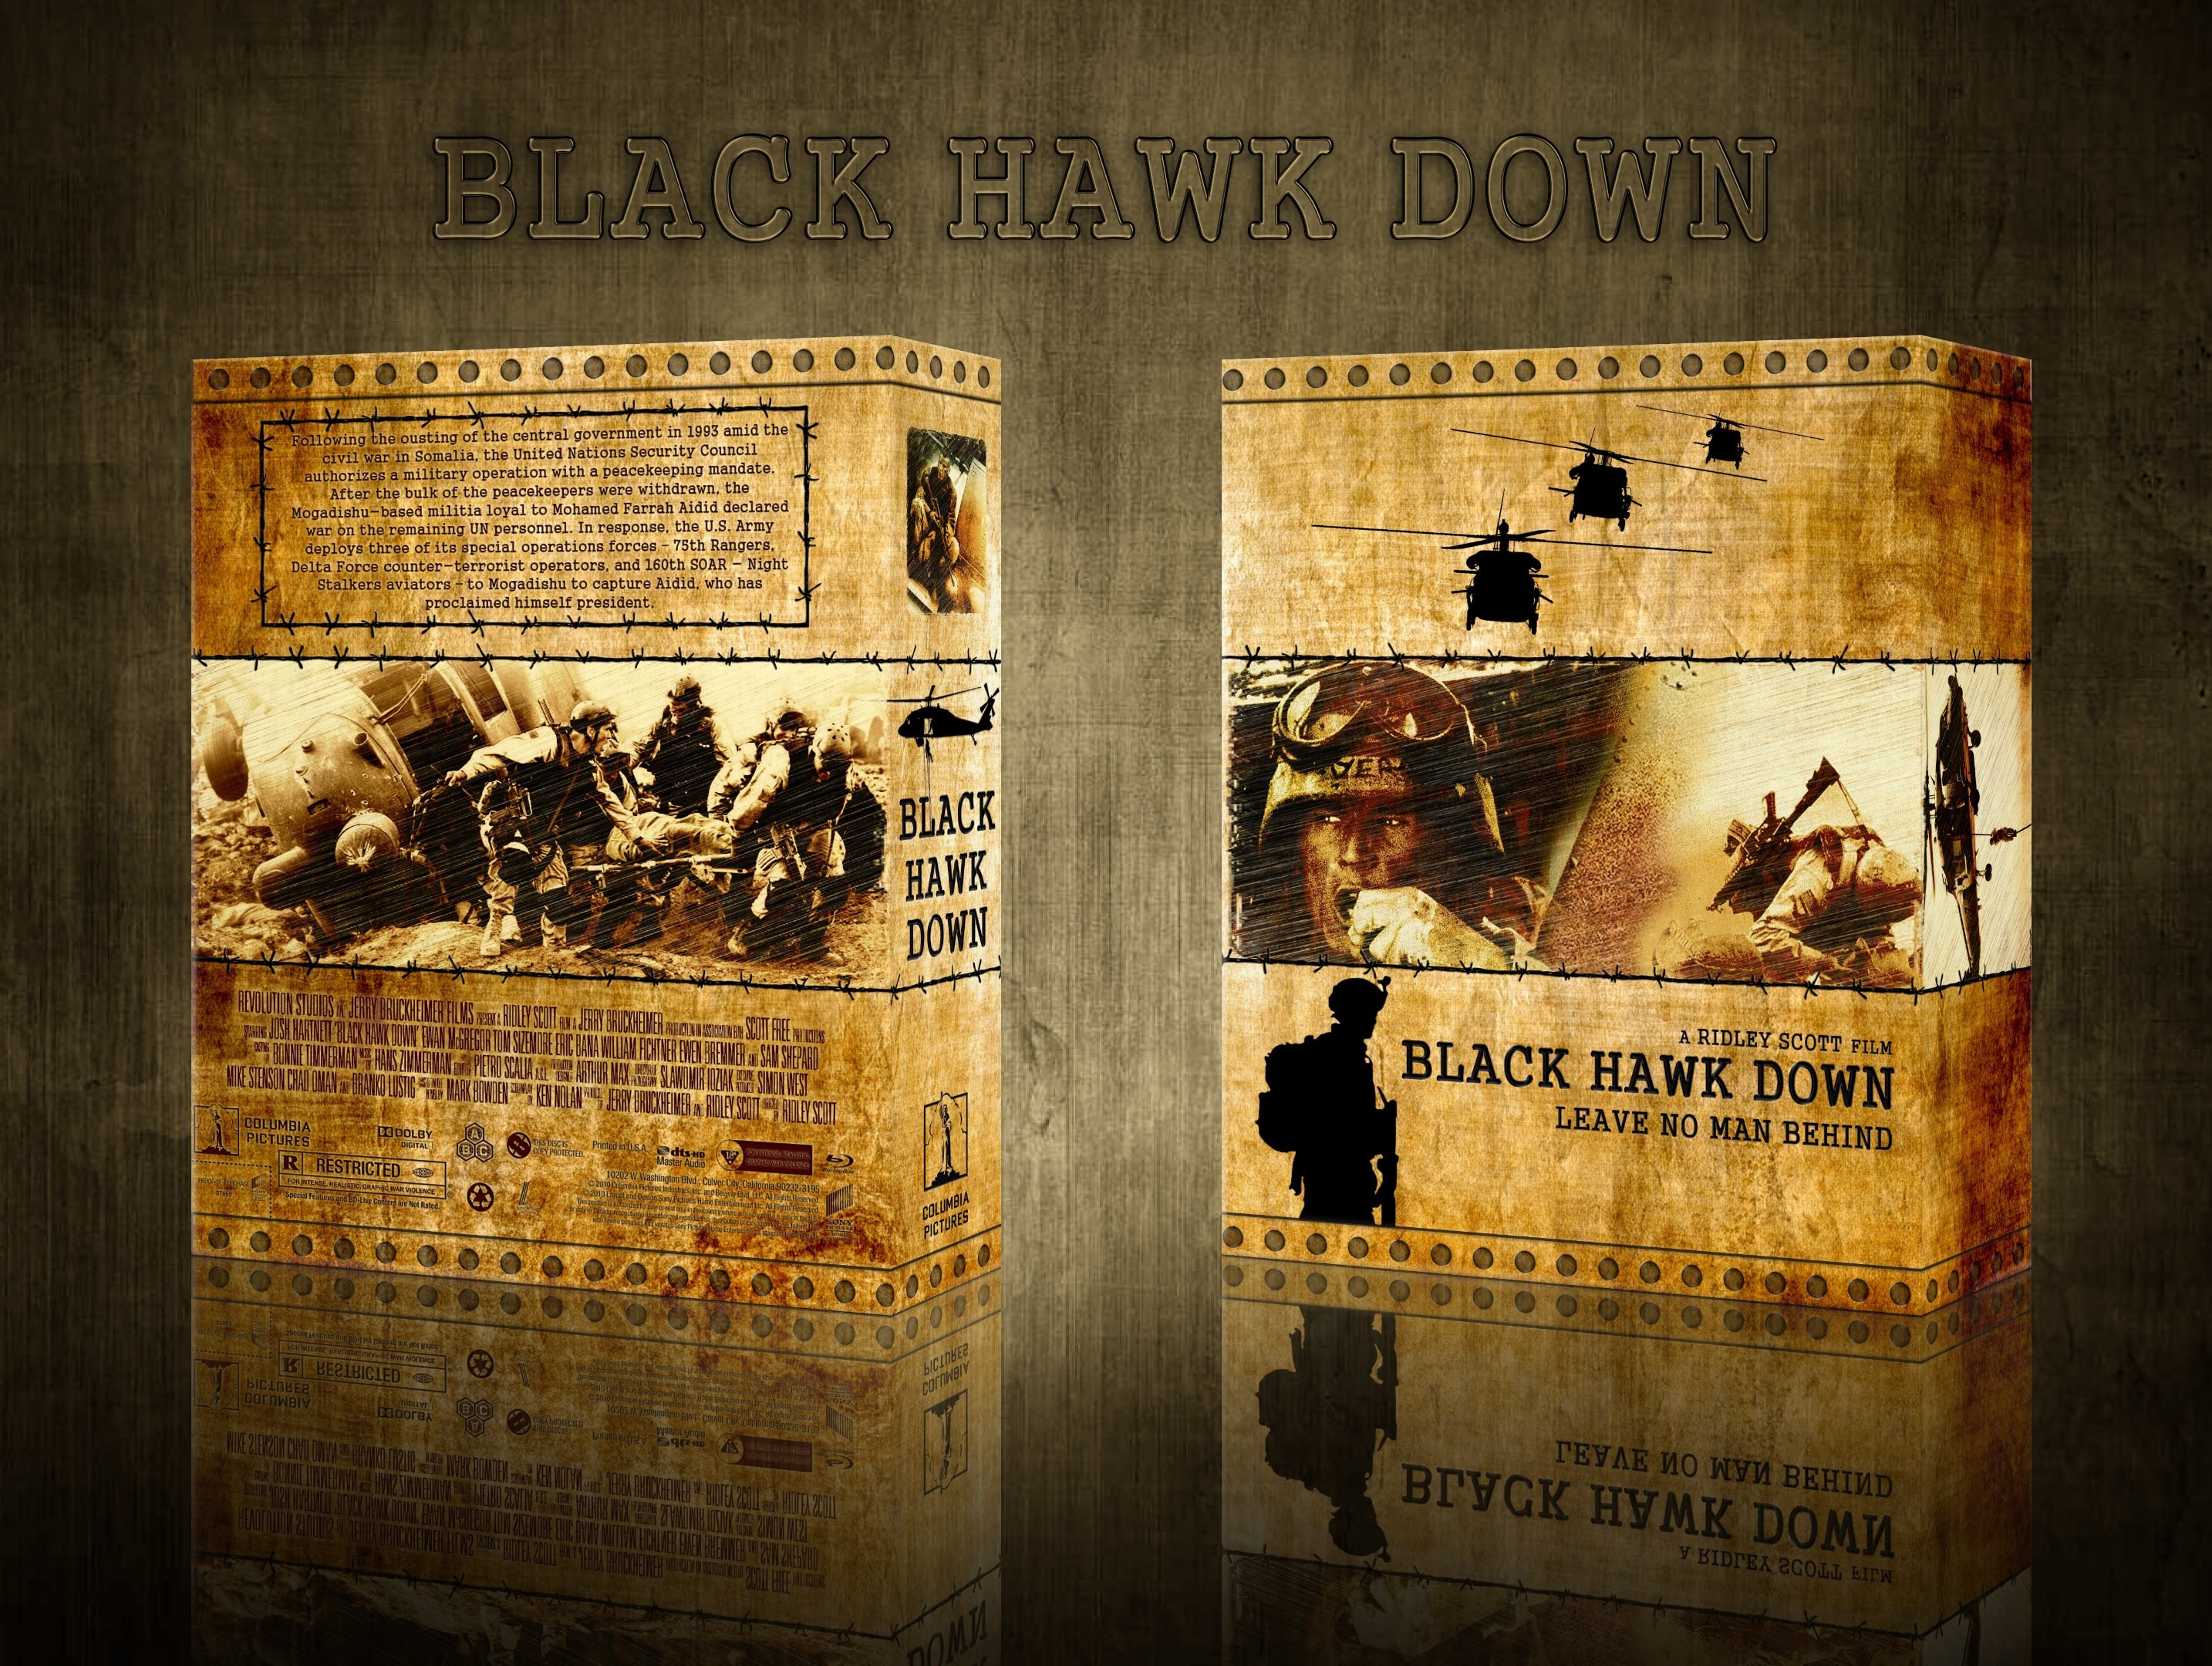 Black Hawk Down box cover